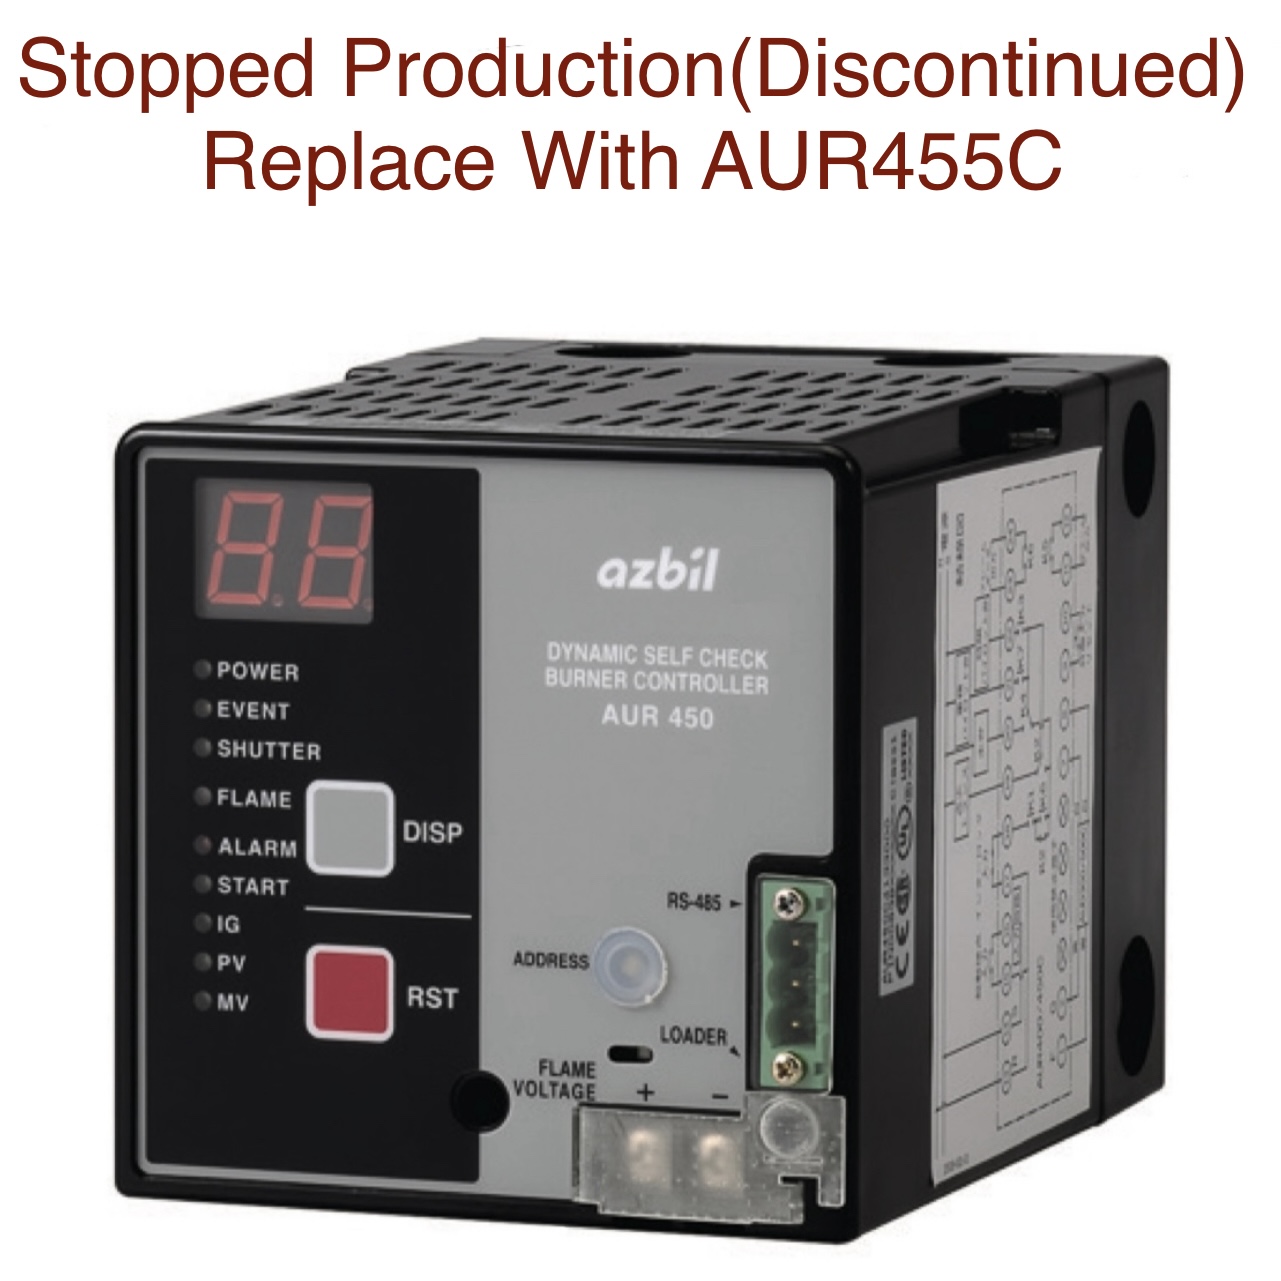 aur450c discountinued replace with aur455c